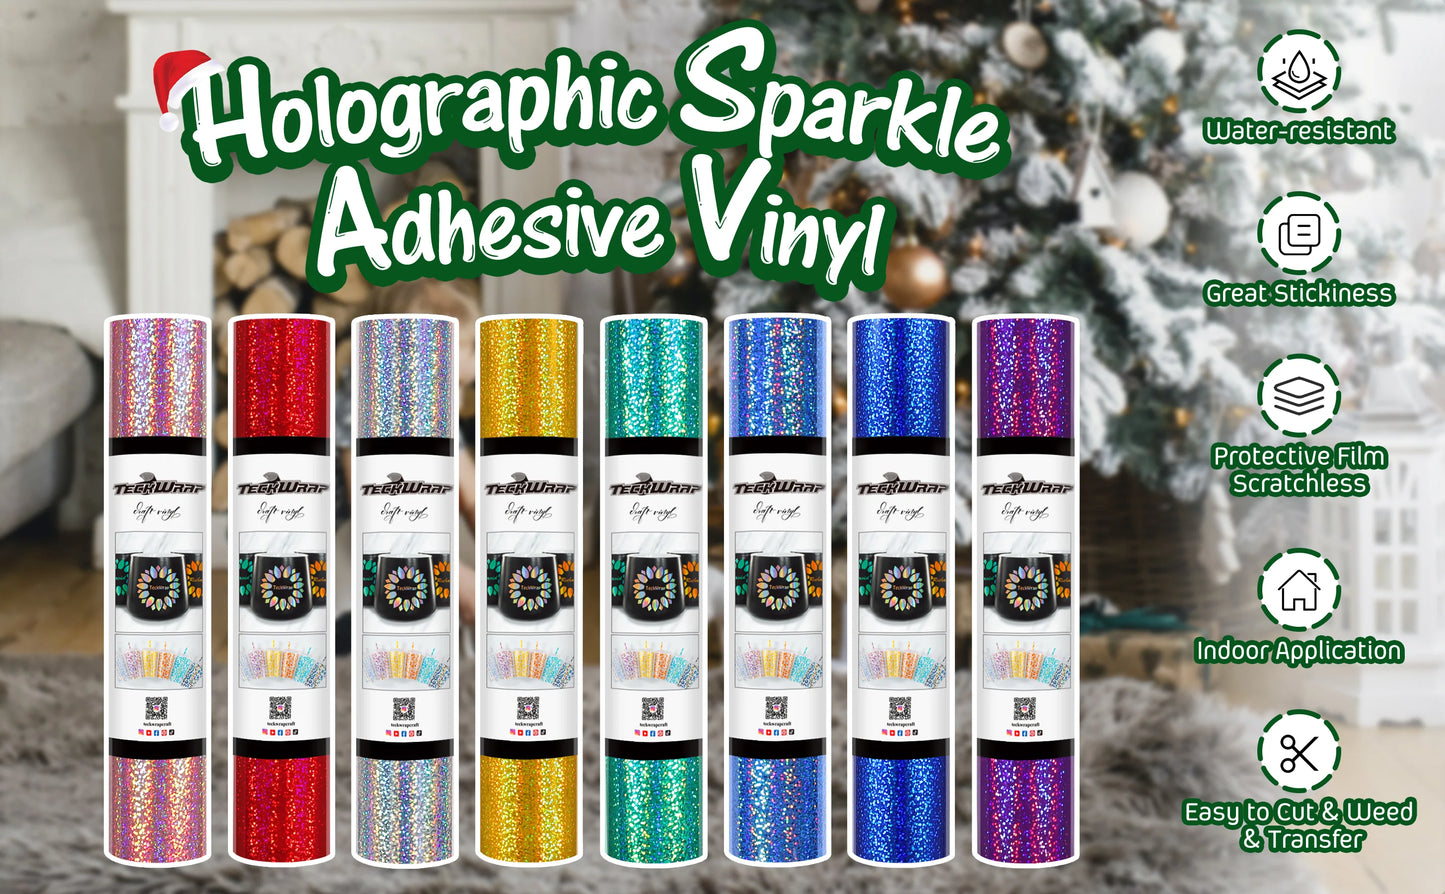 Teckwrap Gold Holographic Sparkle Adhesive Craft Vinyl